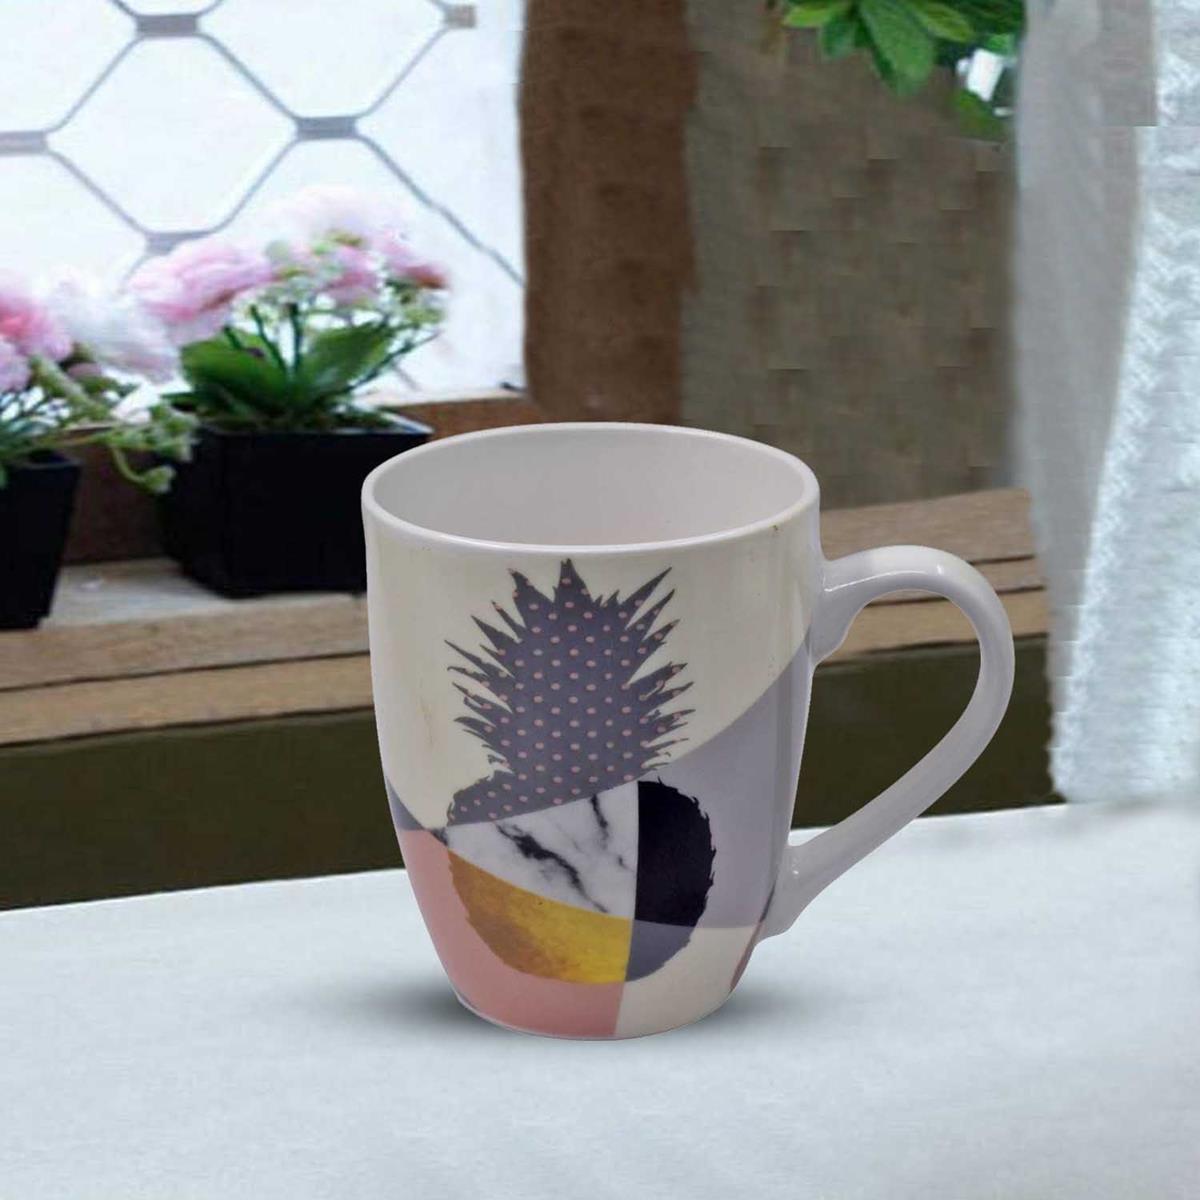 Printed Ceramic Coffee or Tea Mug with handle - 325ml (3551-C)